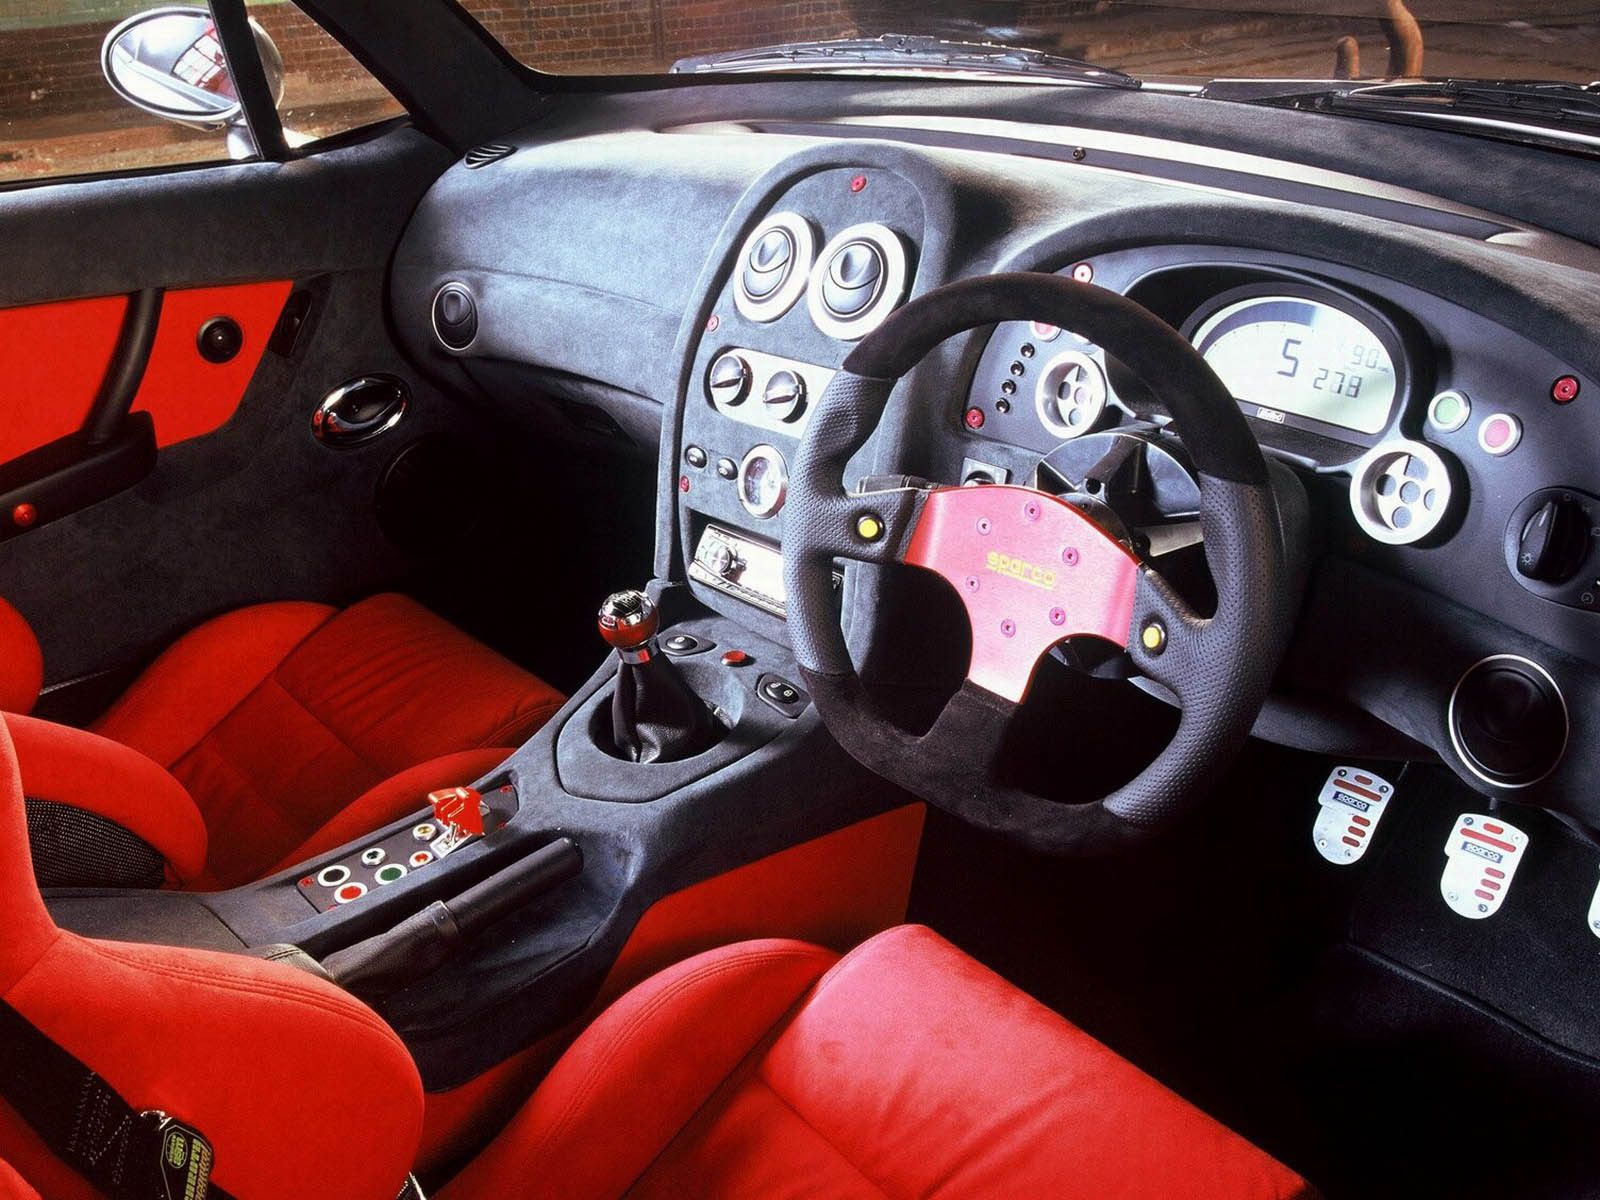 2002 MG Xpower Sv